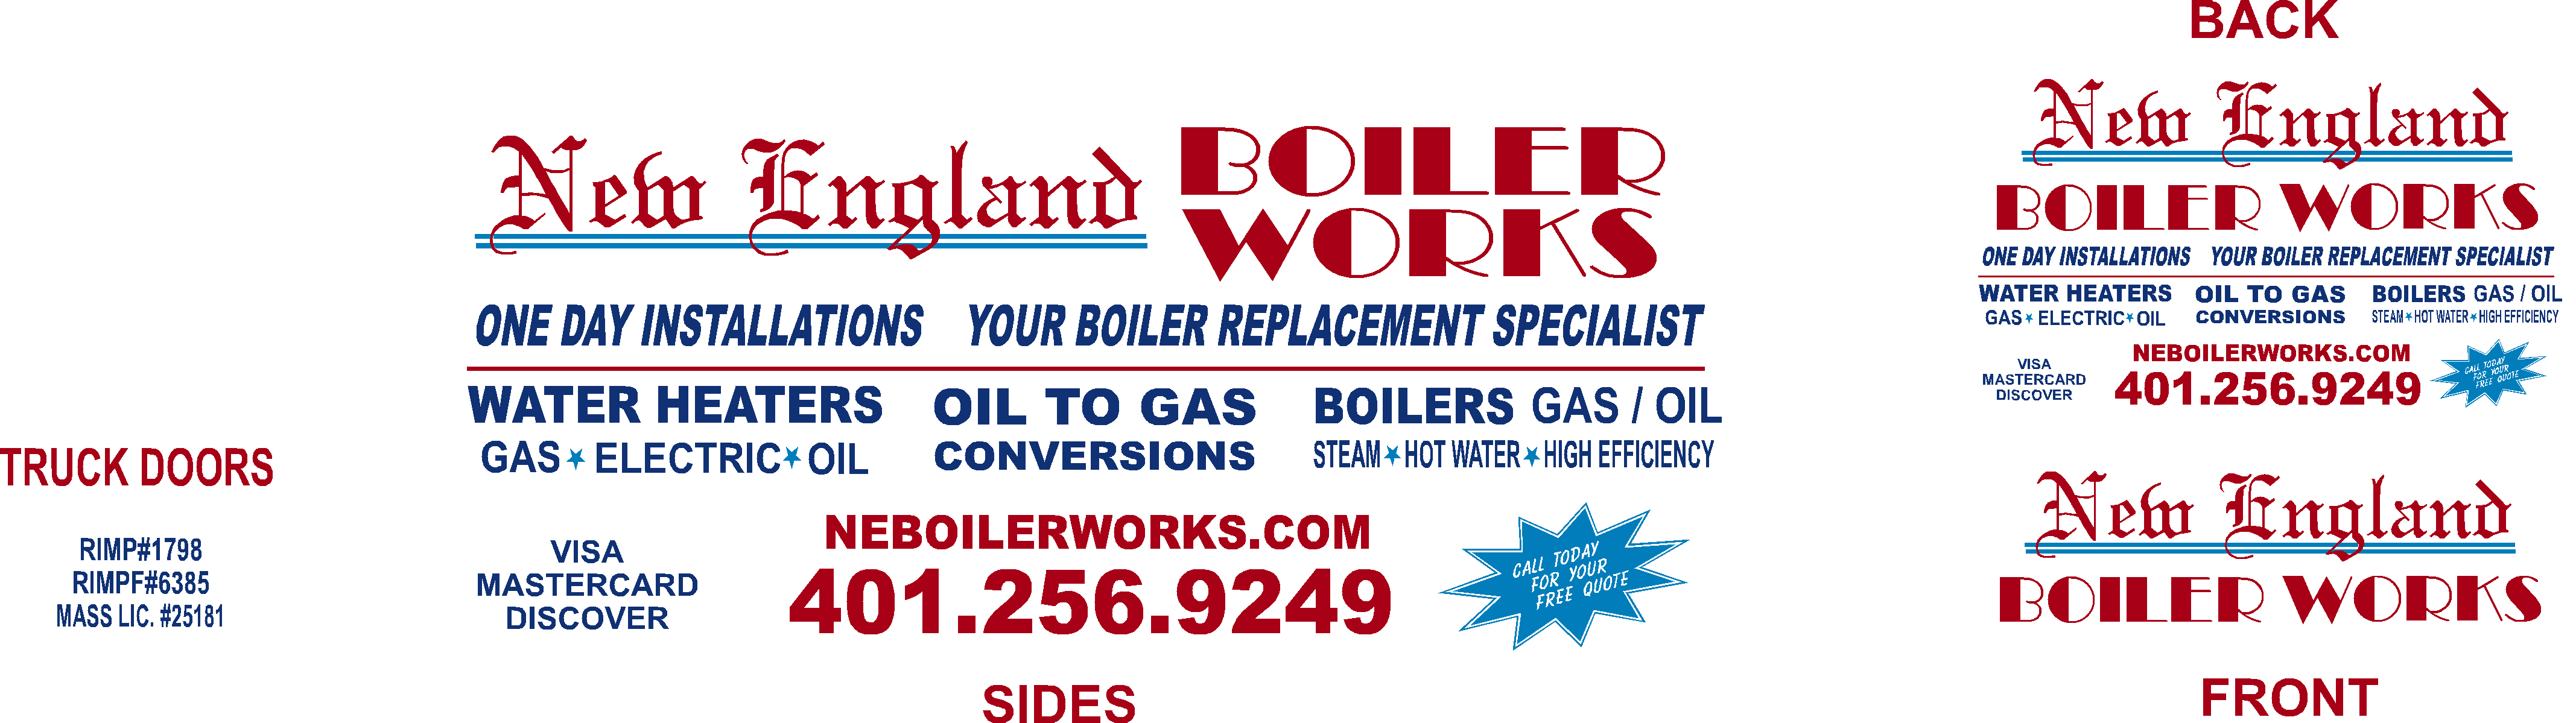 New England Boiler Works Logo